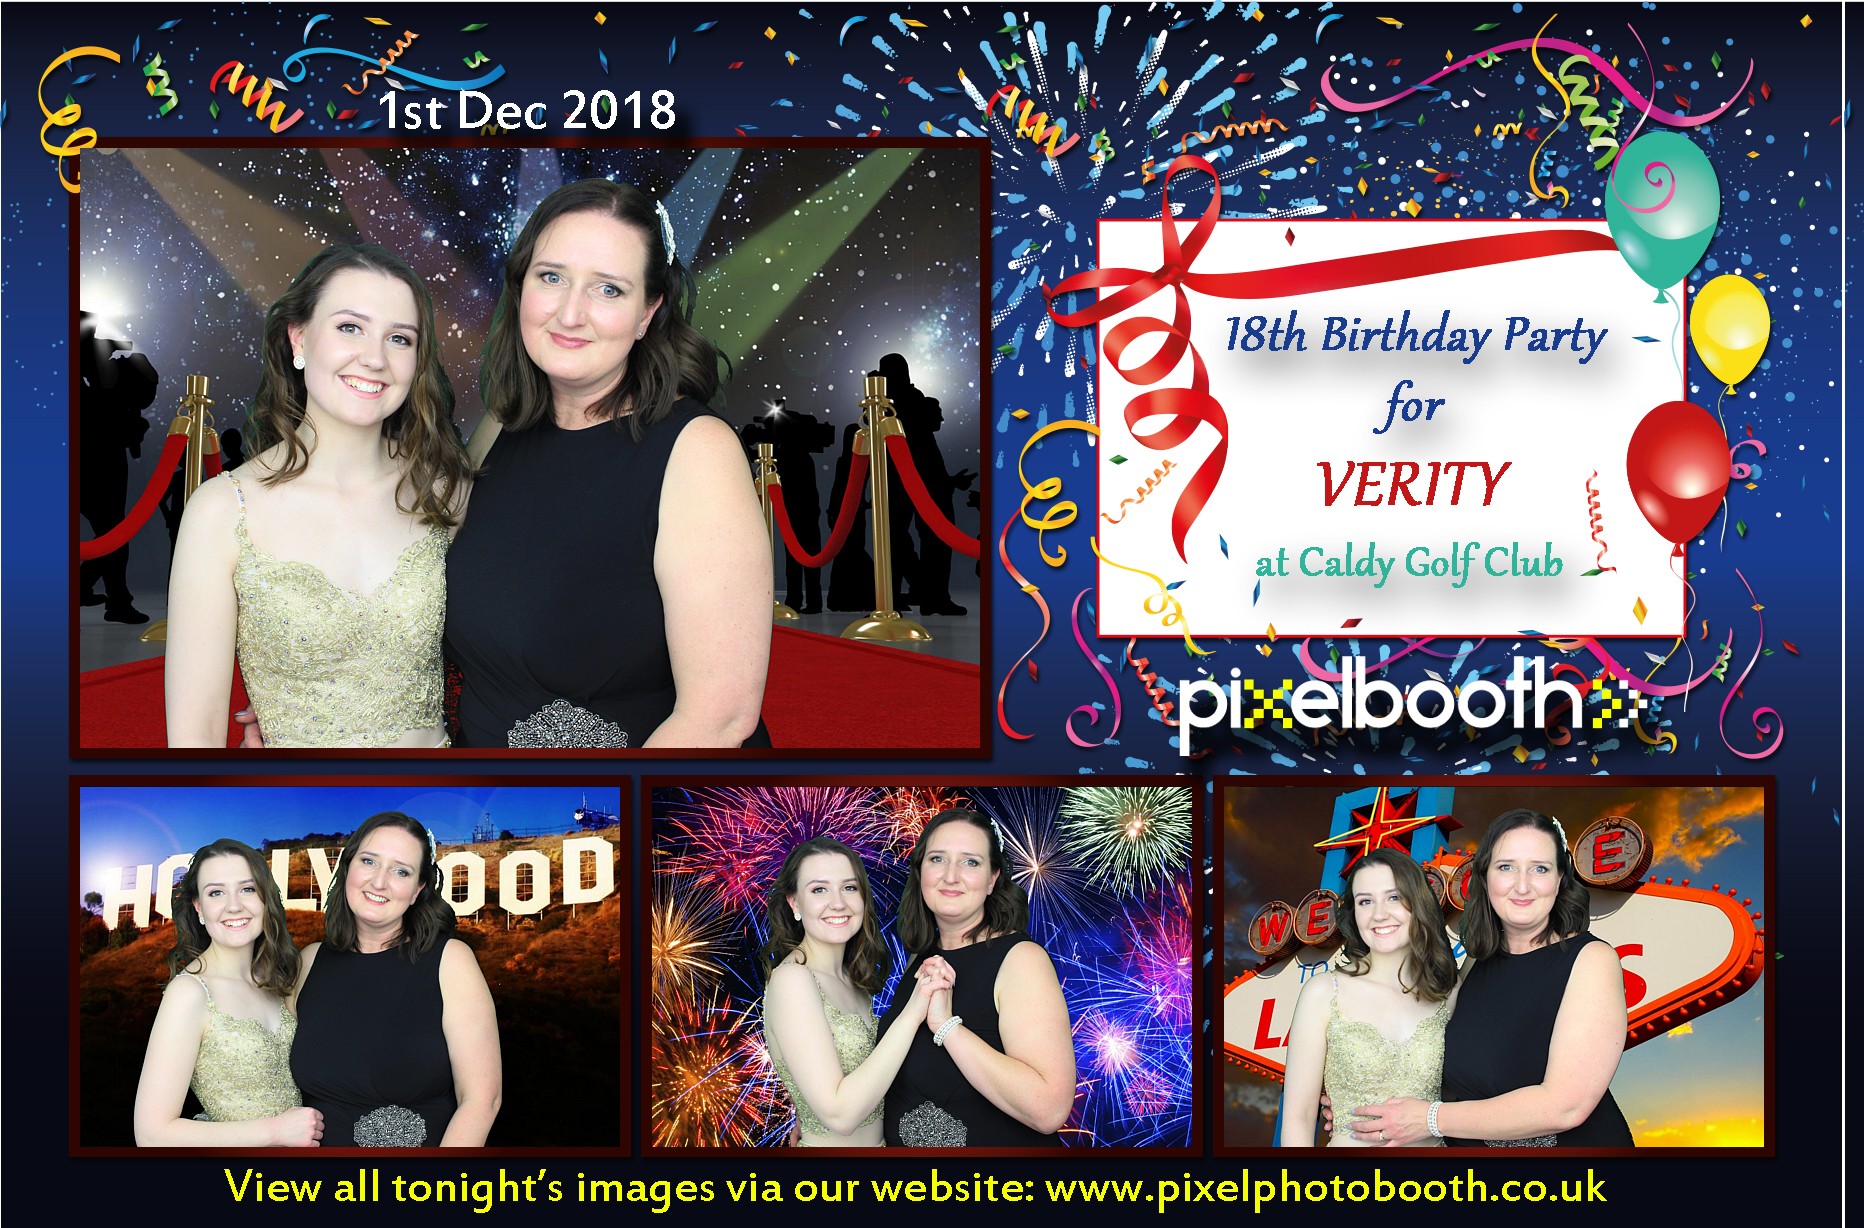 1st Dec 2018: 18th Birthday for Verity at Caldy Golf Club